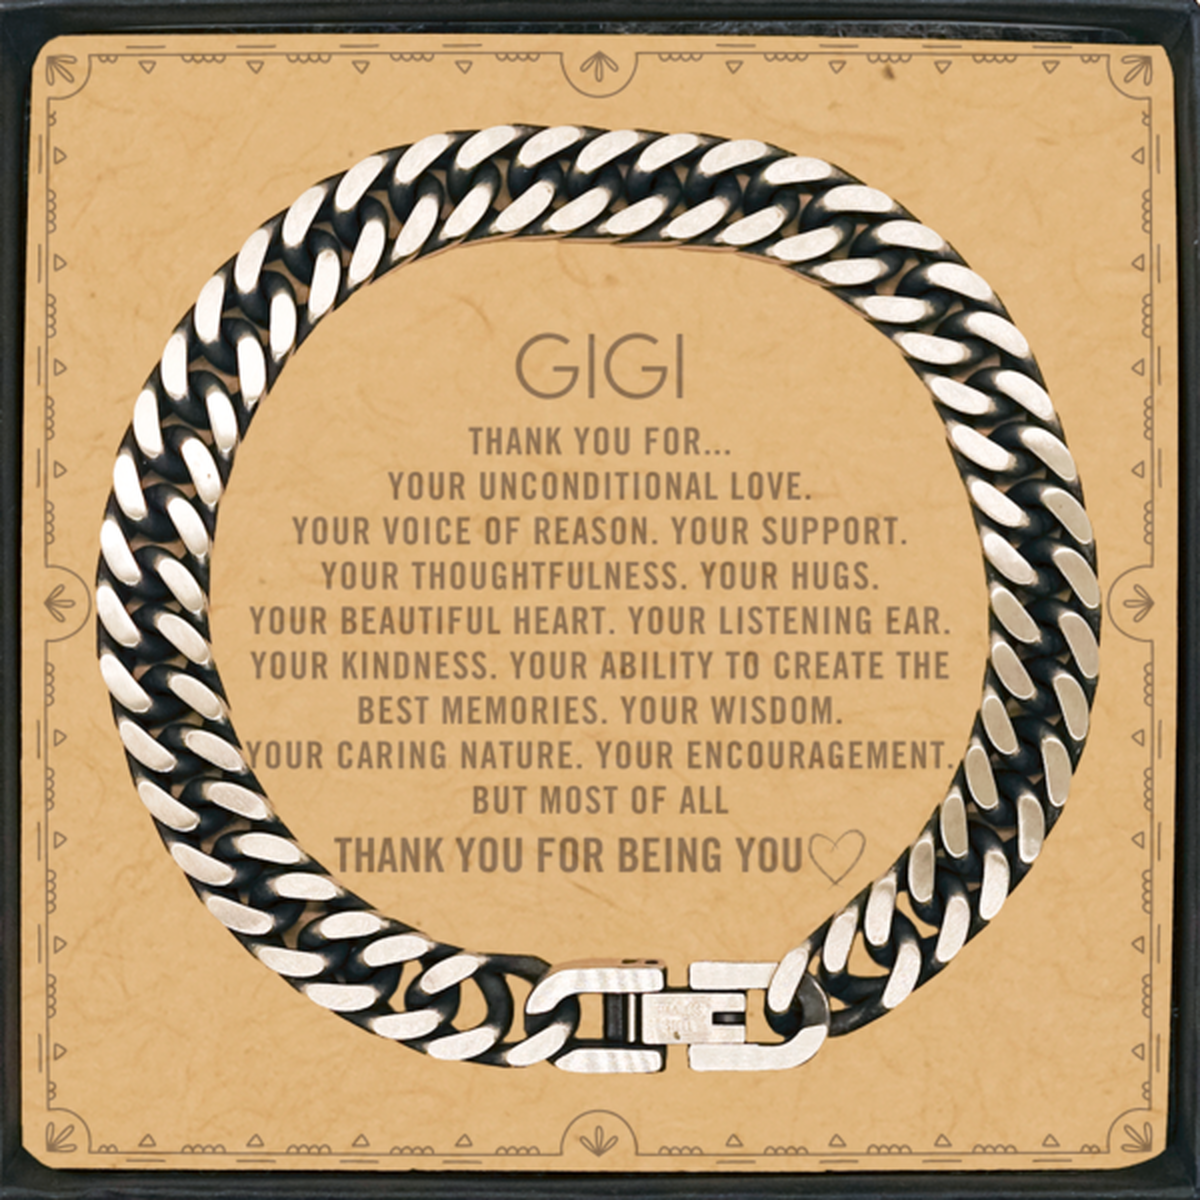 Gigi Cuban Link Chain Bracelet Custom, Message Card Gifts For Gigi Christmas Graduation Birthday Gifts for Men Women Gigi Thank you for Your unconditional love